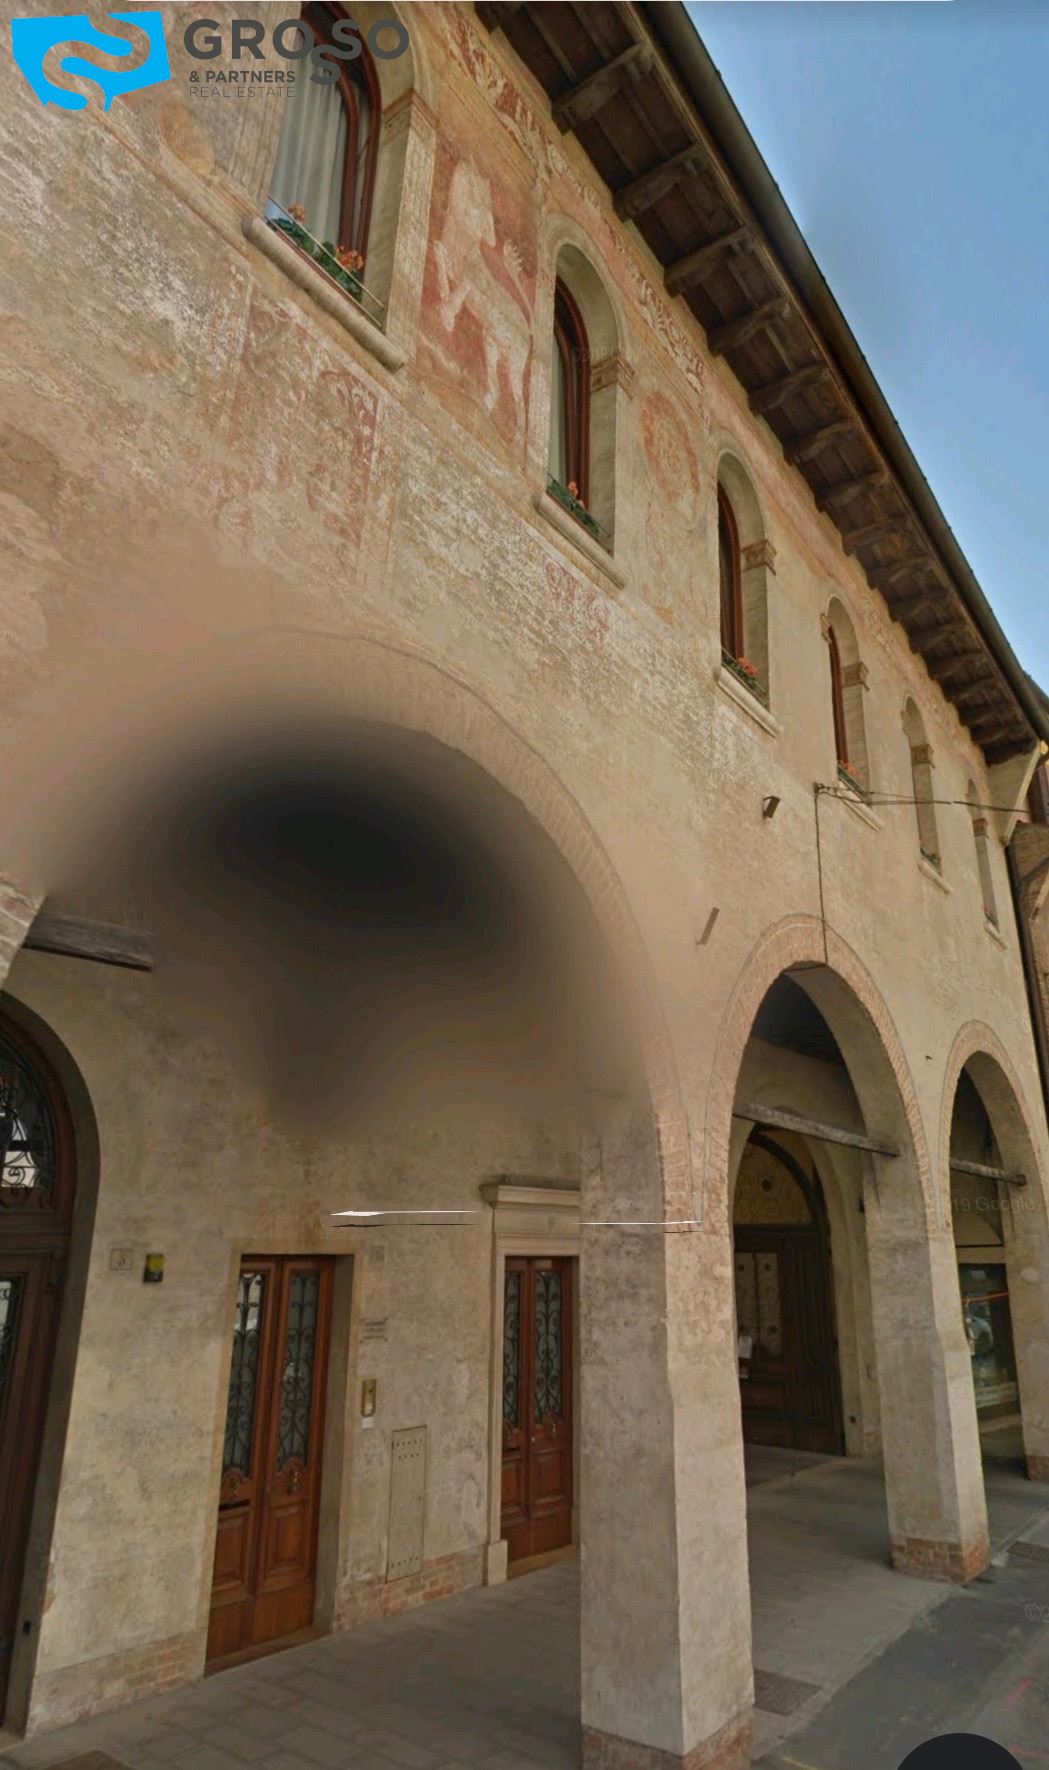 Affitto Garage a Treviso - Grosso&Partners Immobiliare